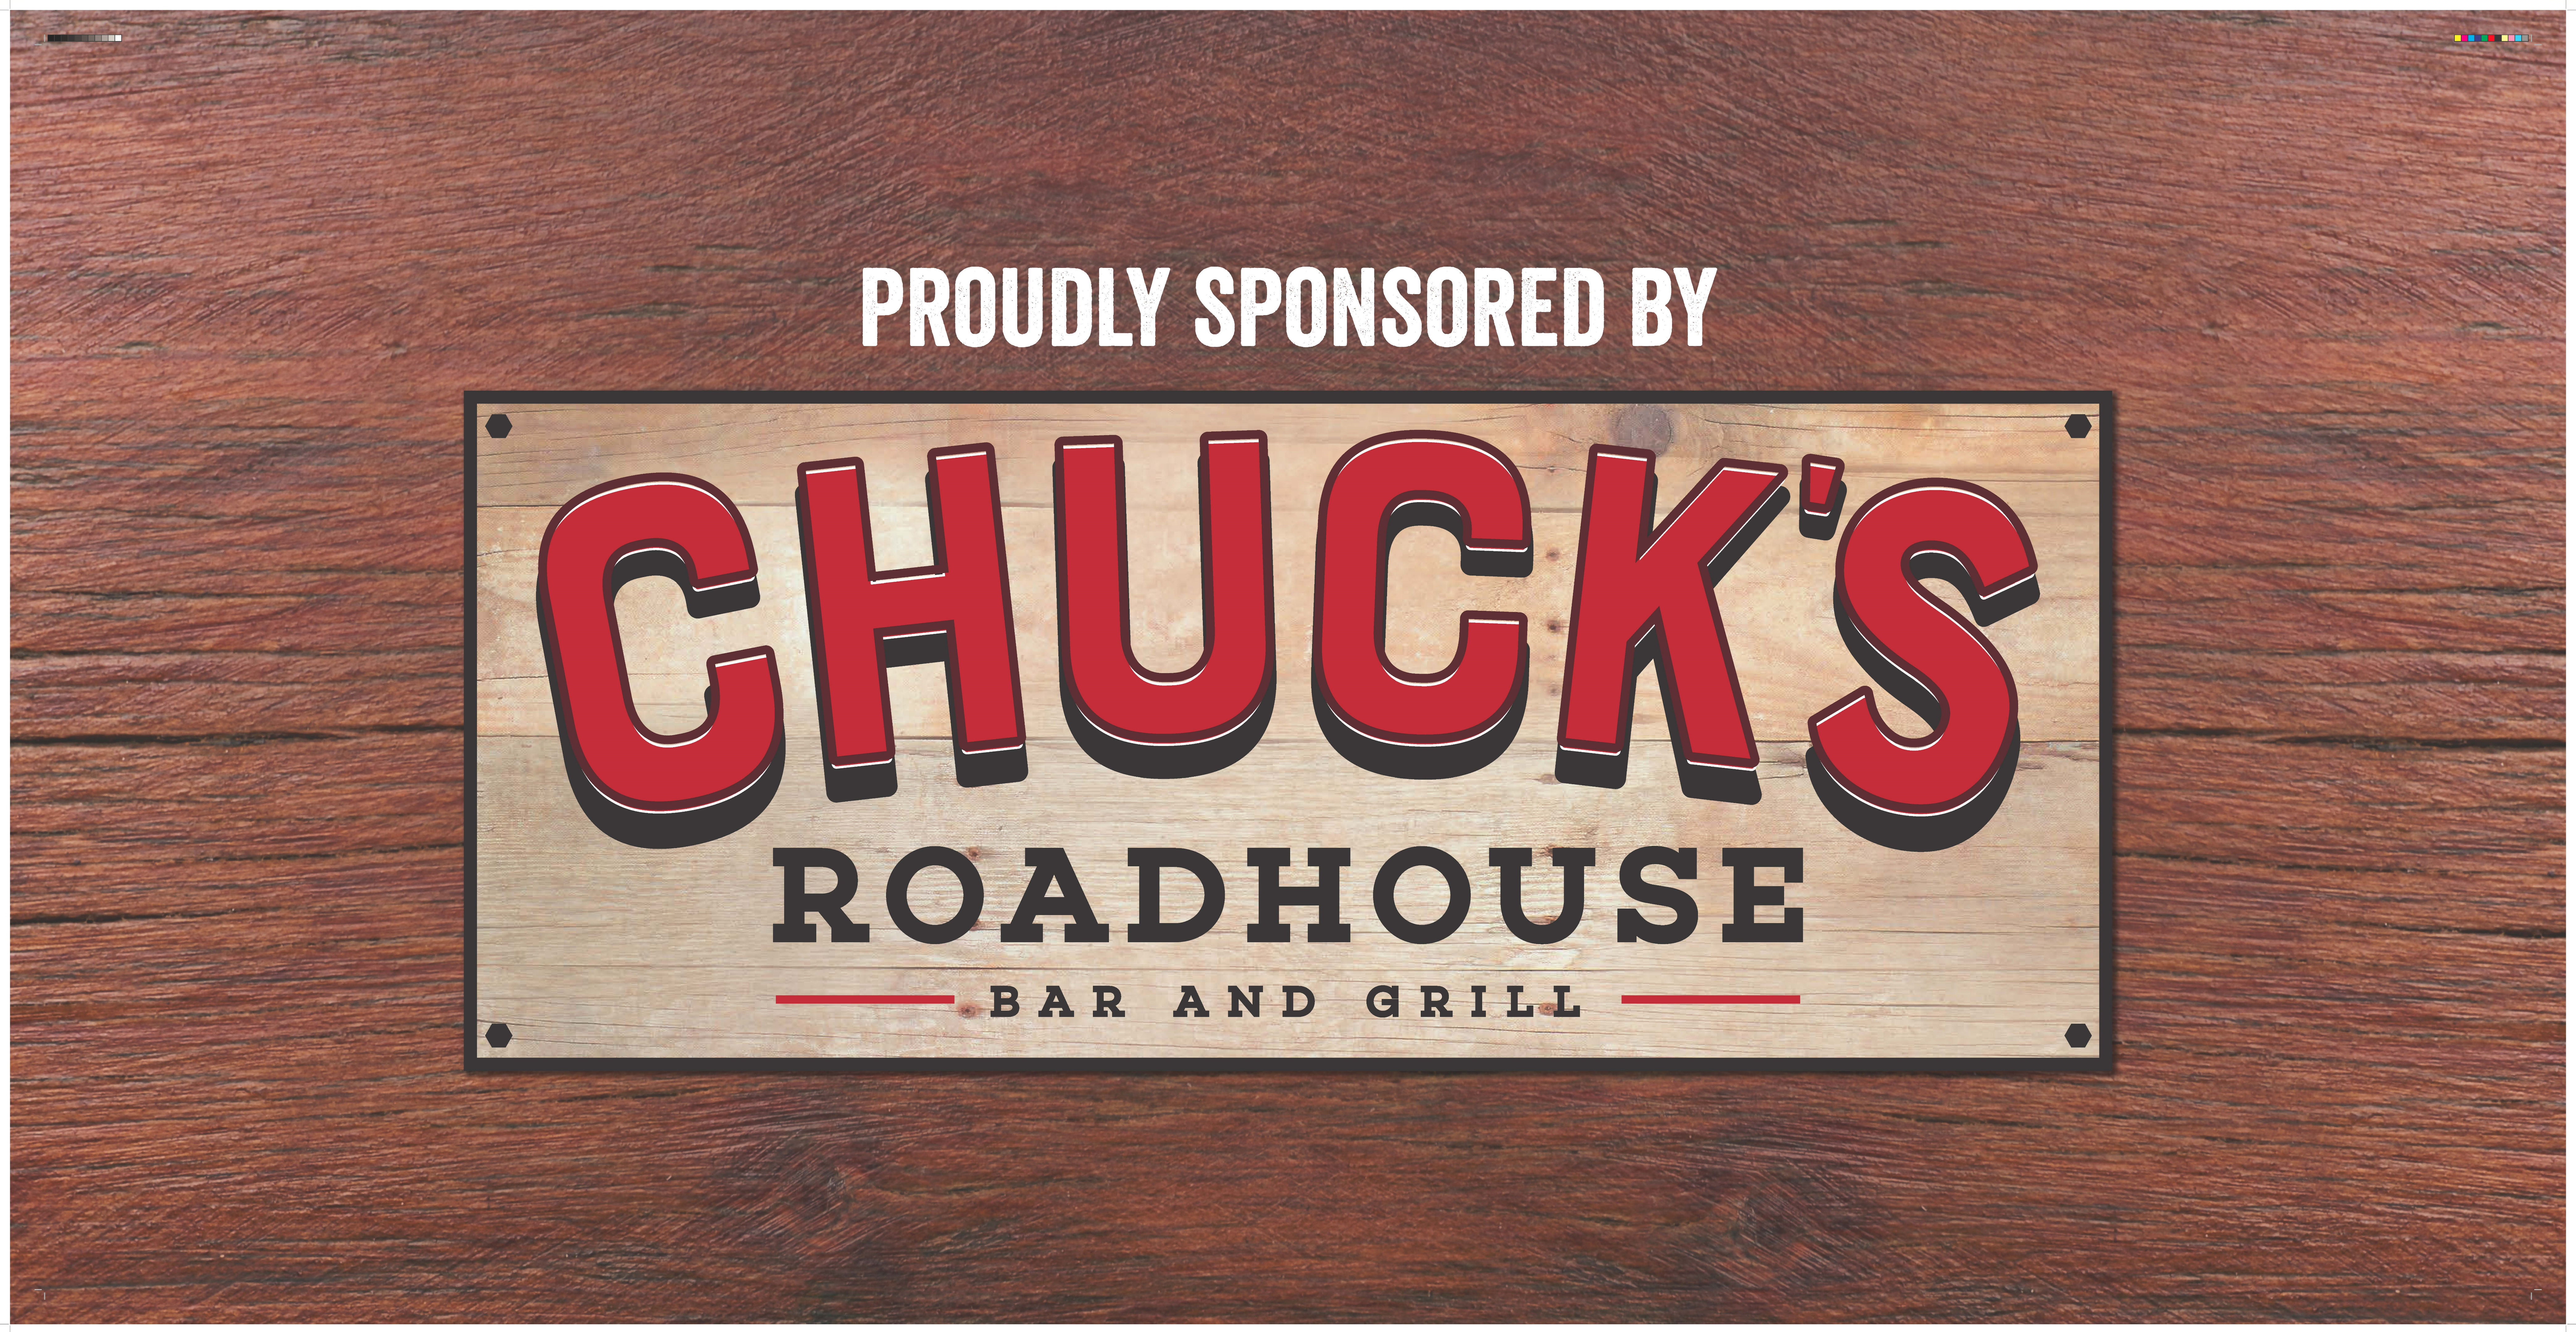 Chucks Roadhouse